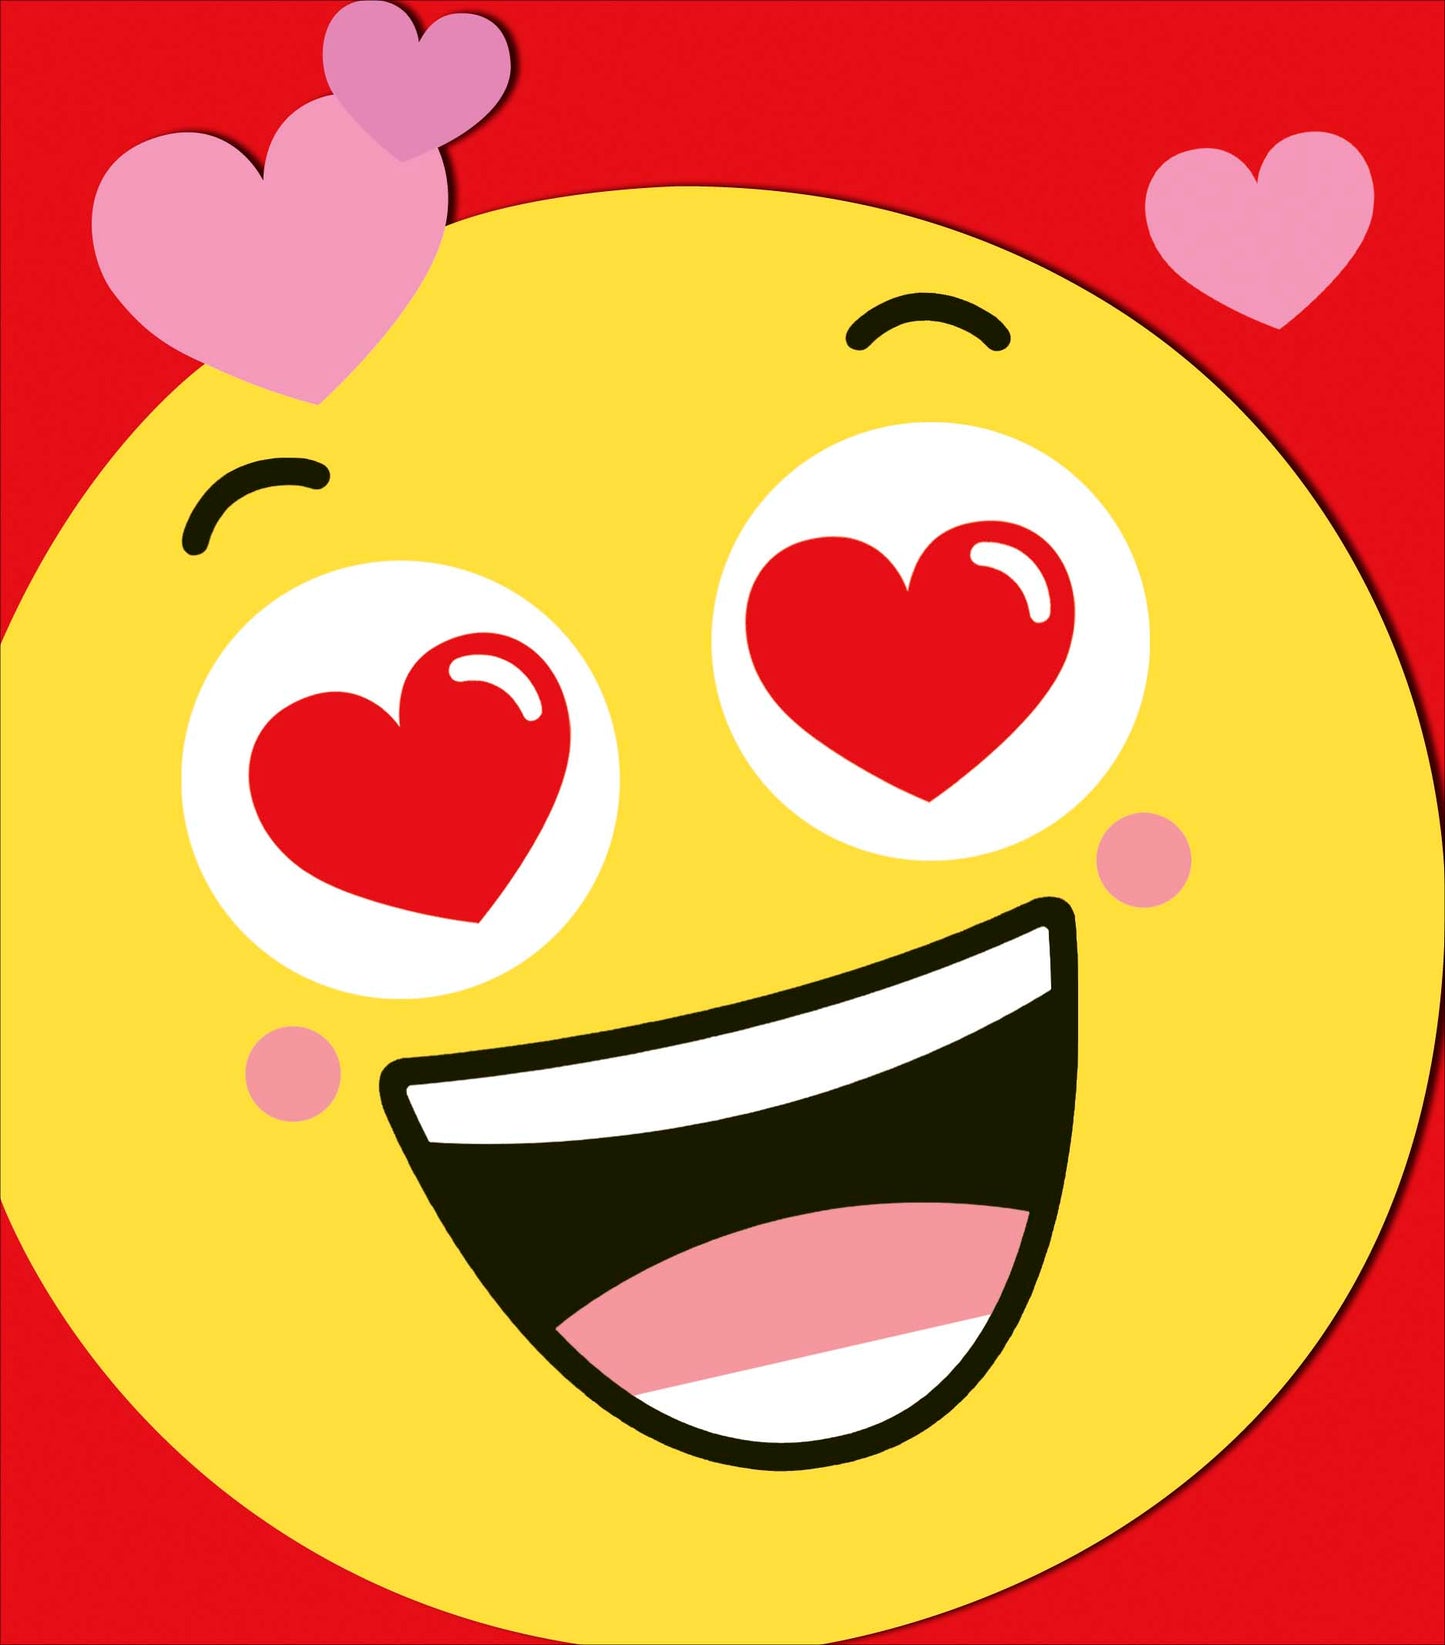 Love Emoji Valentine's Day Greeting Card